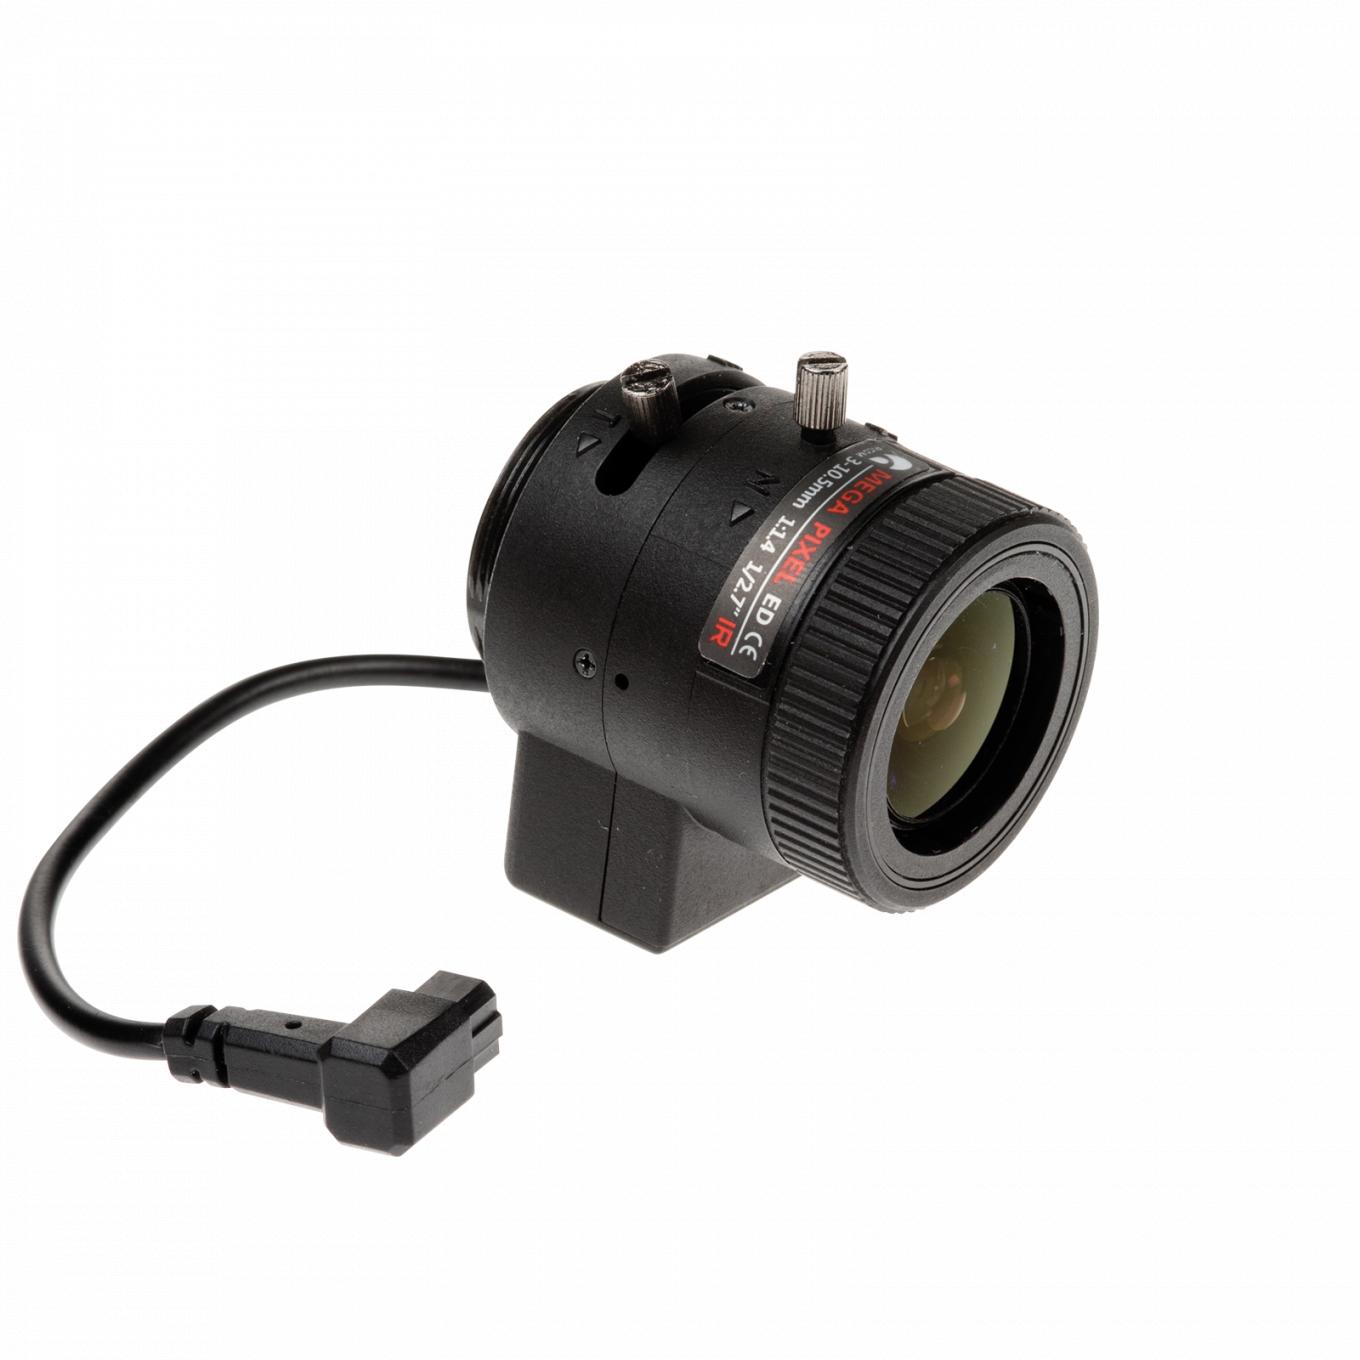 AXIS Lens CS 3-10.5 mm F1.4 DC-Iris 2 MP noir avec fil